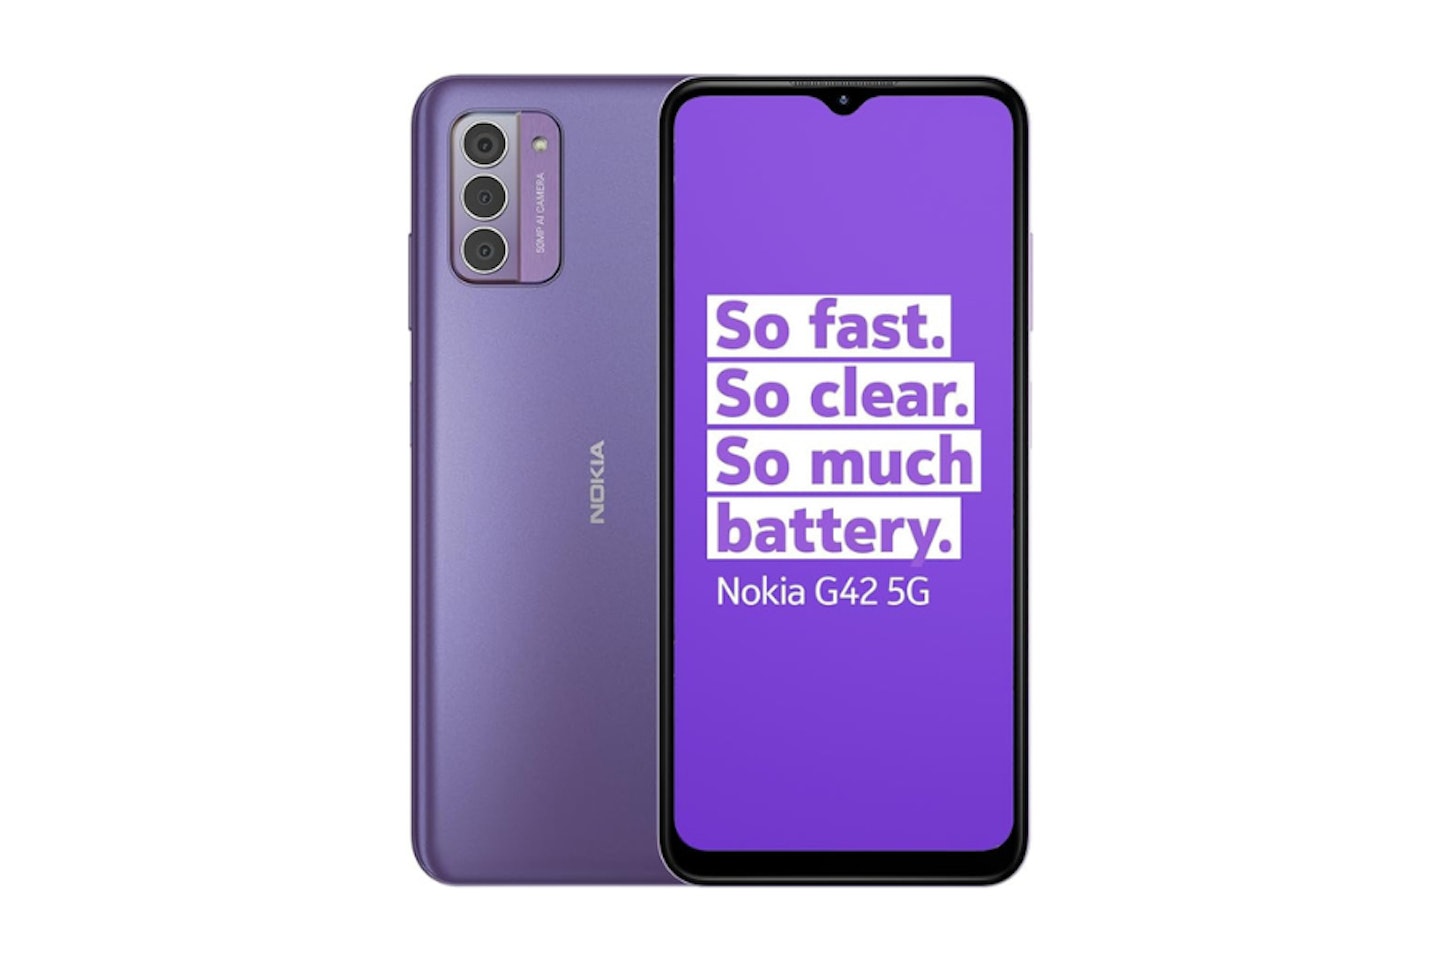 Nokia G42 5G 6.56” HD+ Smartphone